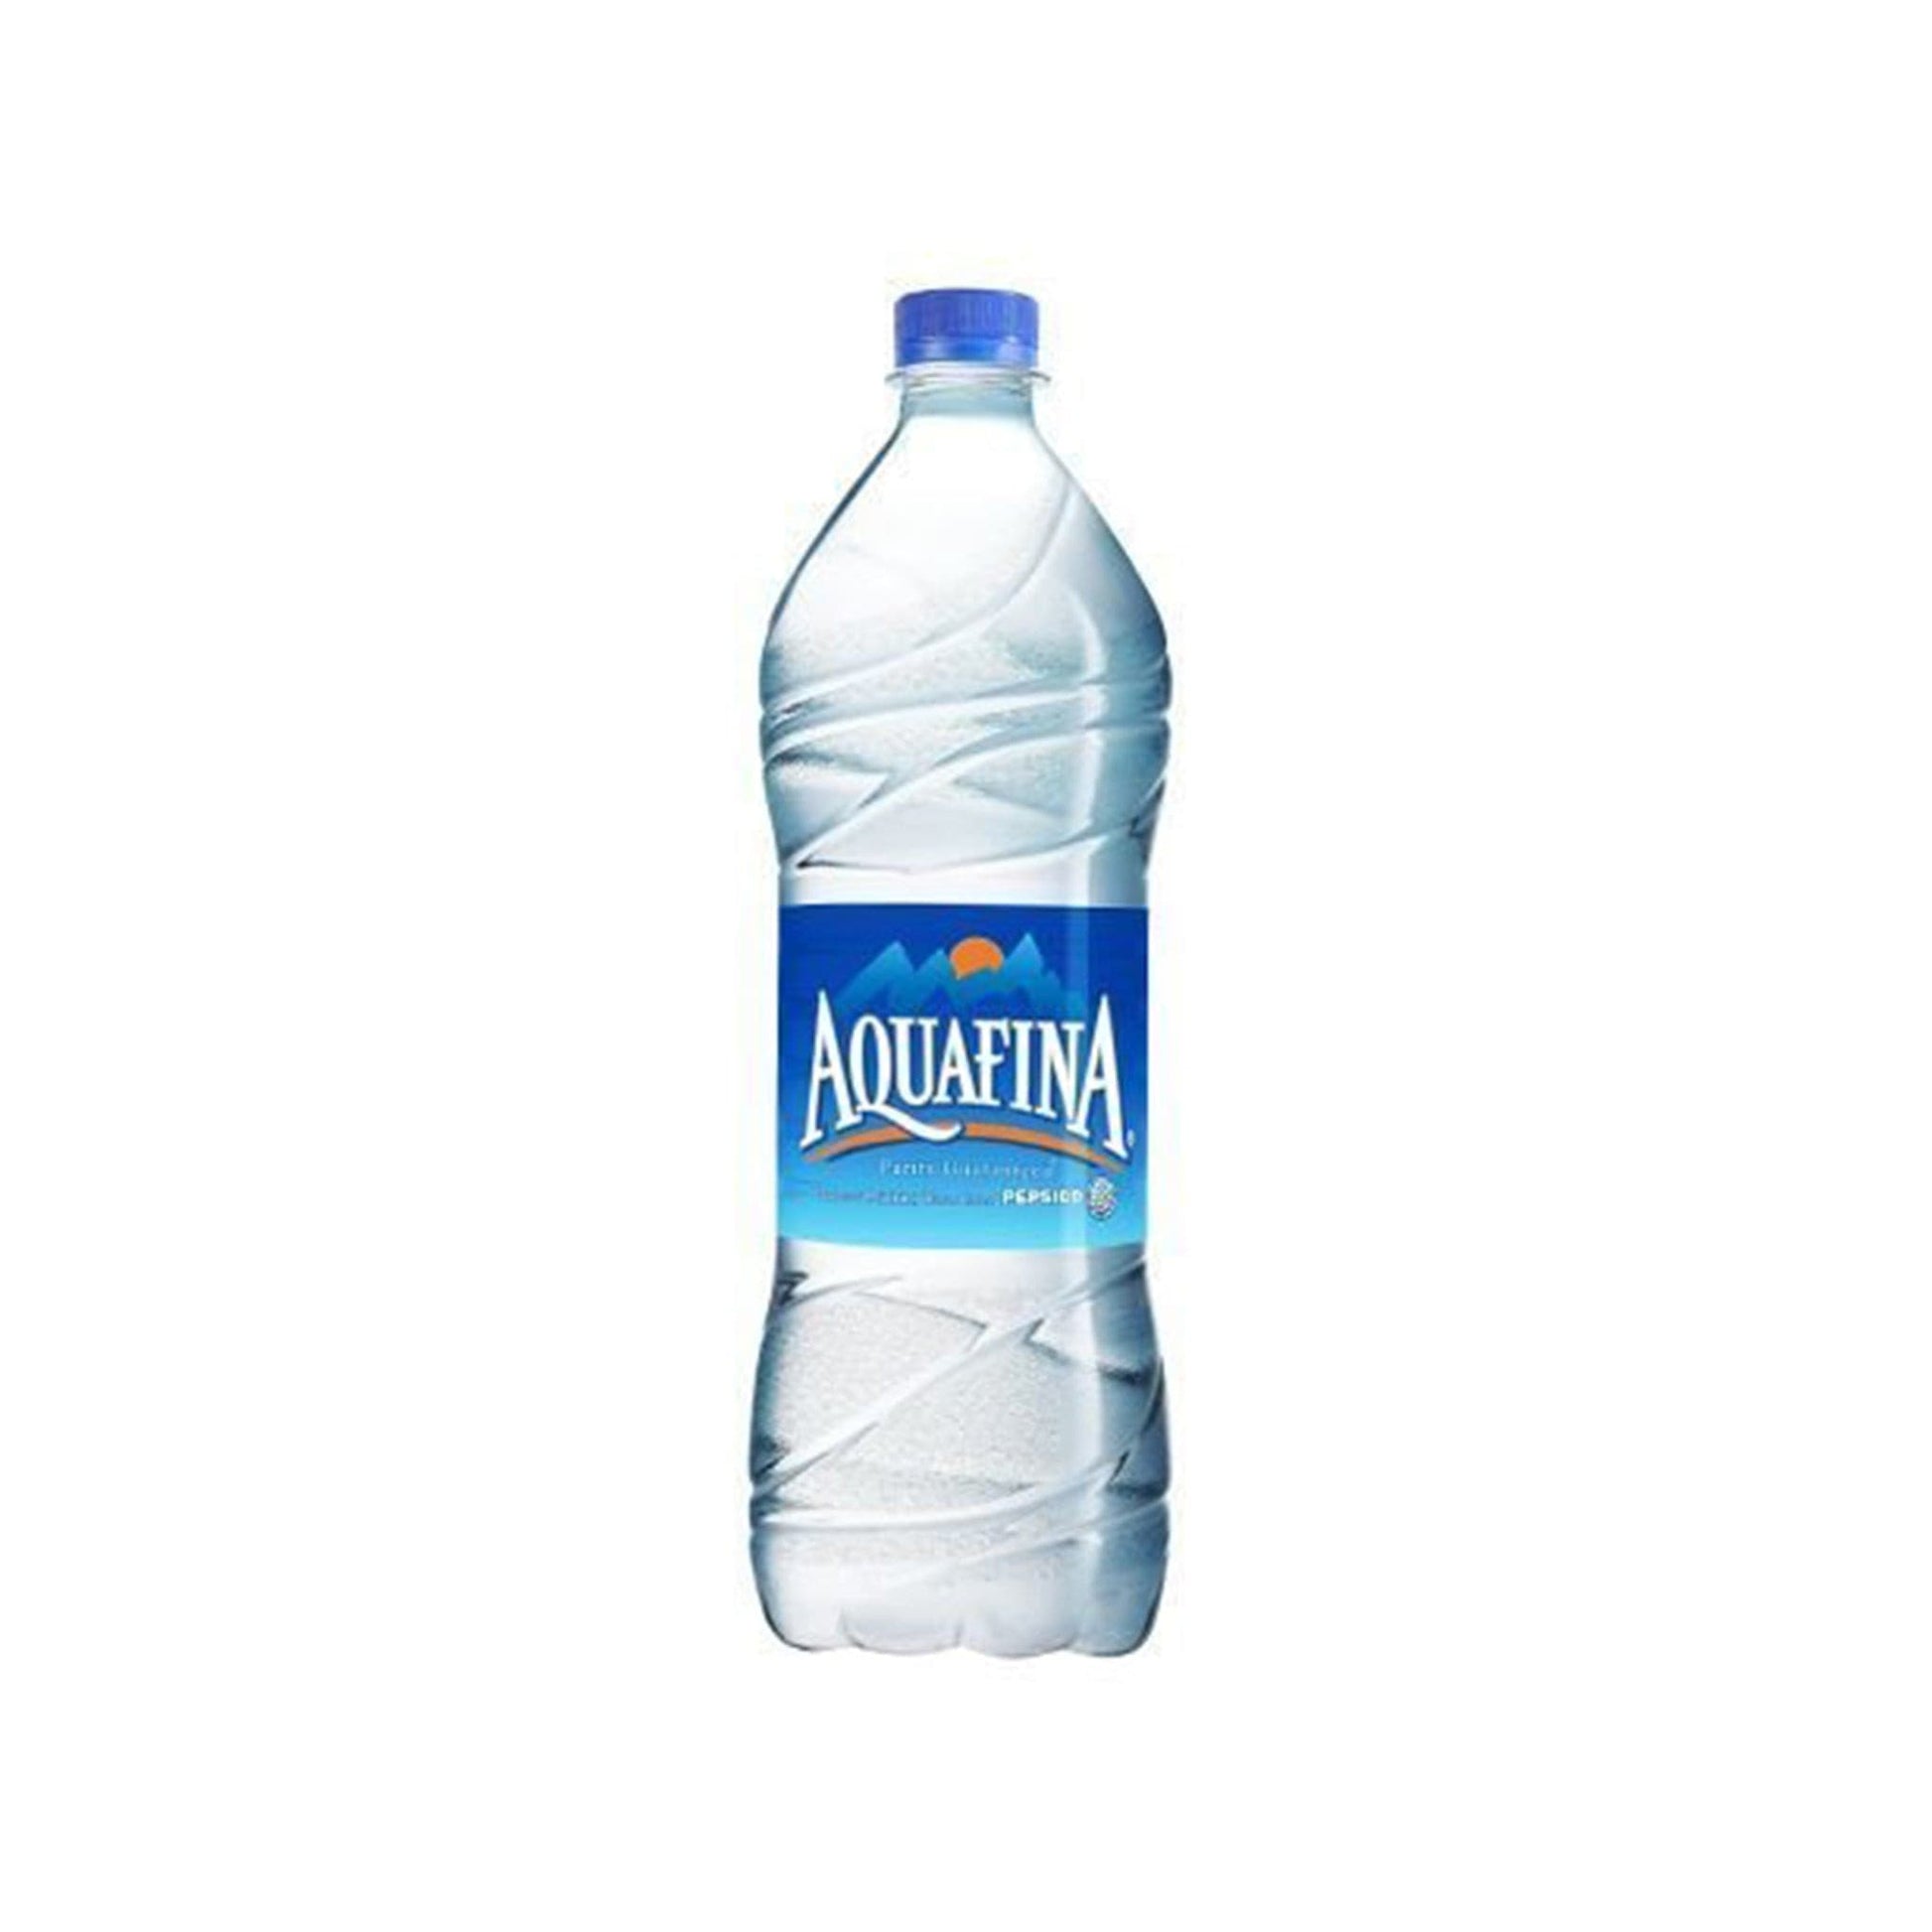 Aquafina Packaged Drinking Water.